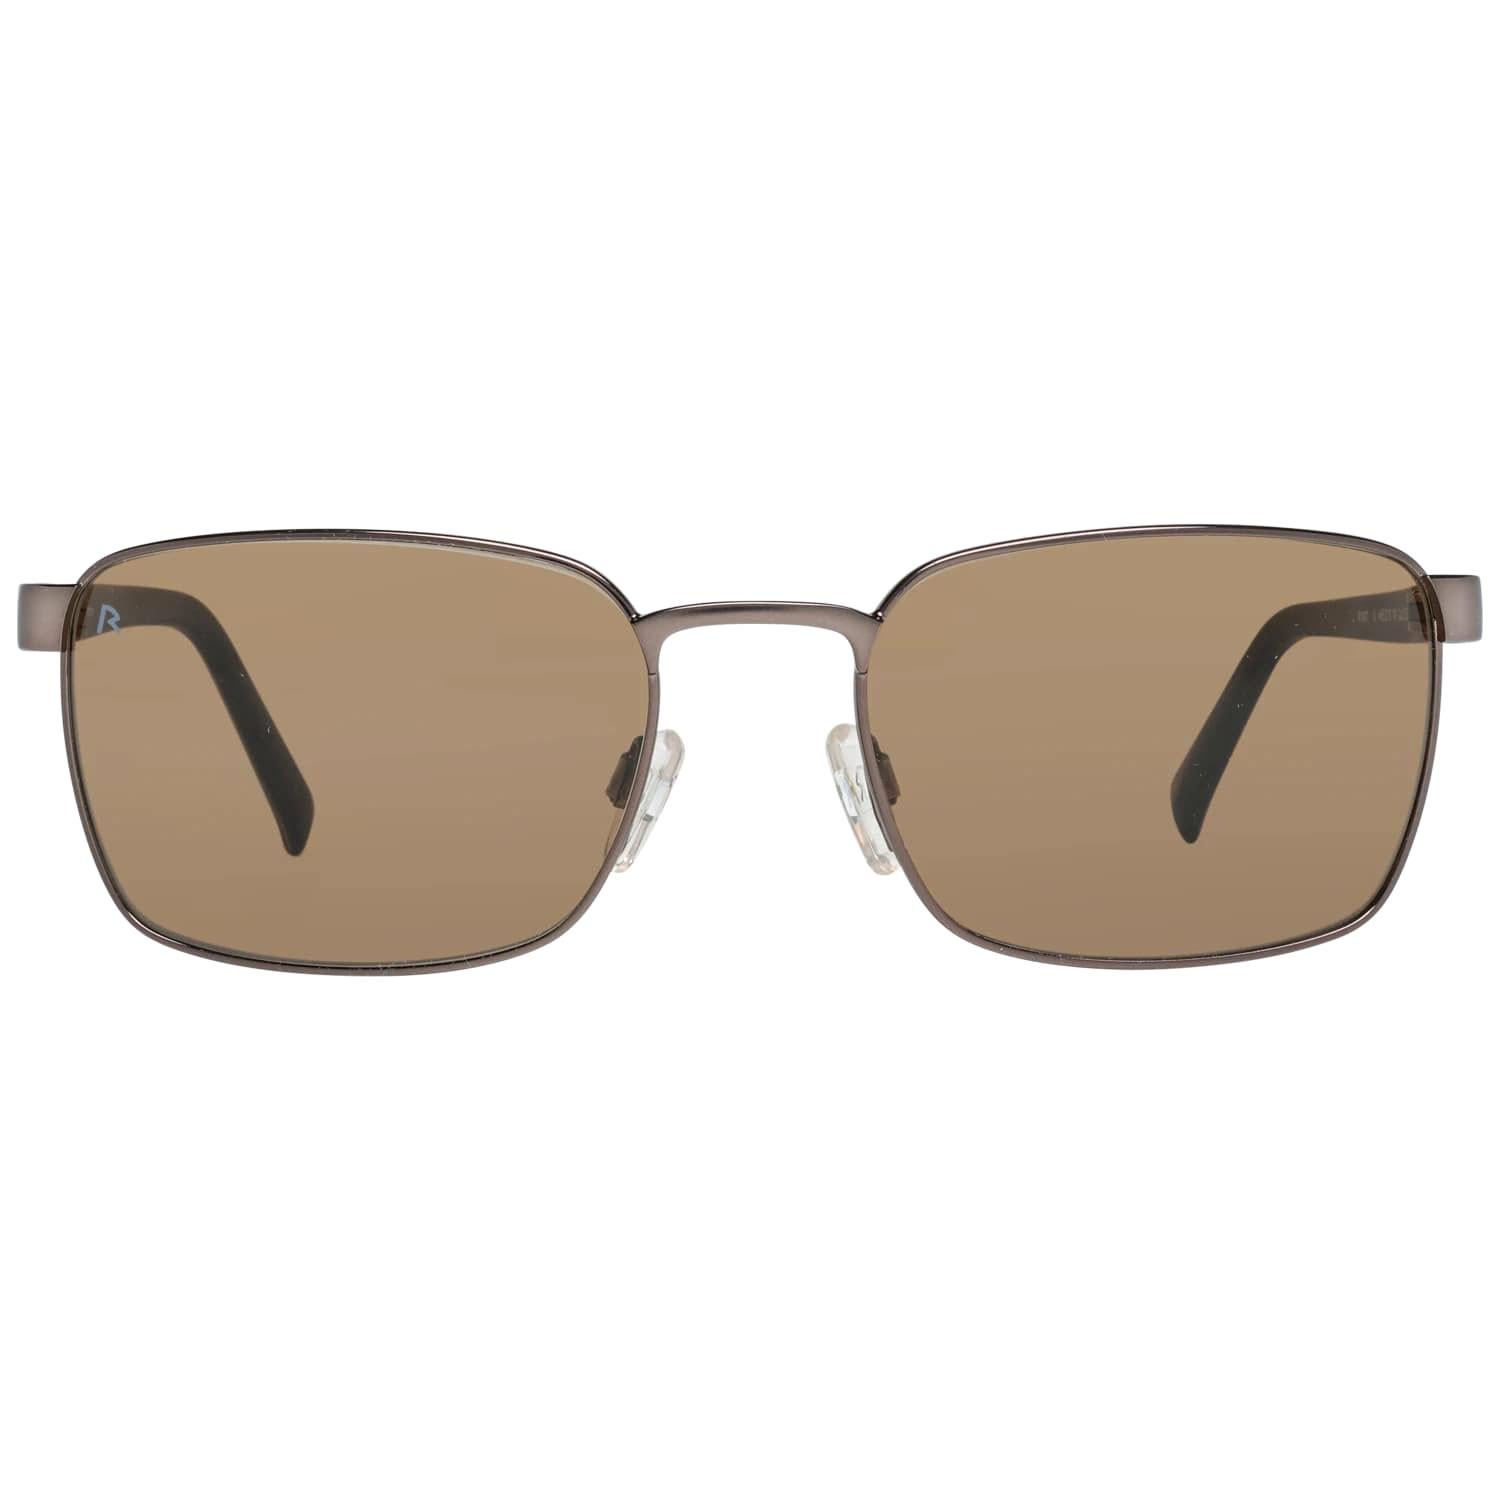 Rodenstock Mint Unisex Brown Sunglasses R1417 B 56 56-19-139 mm